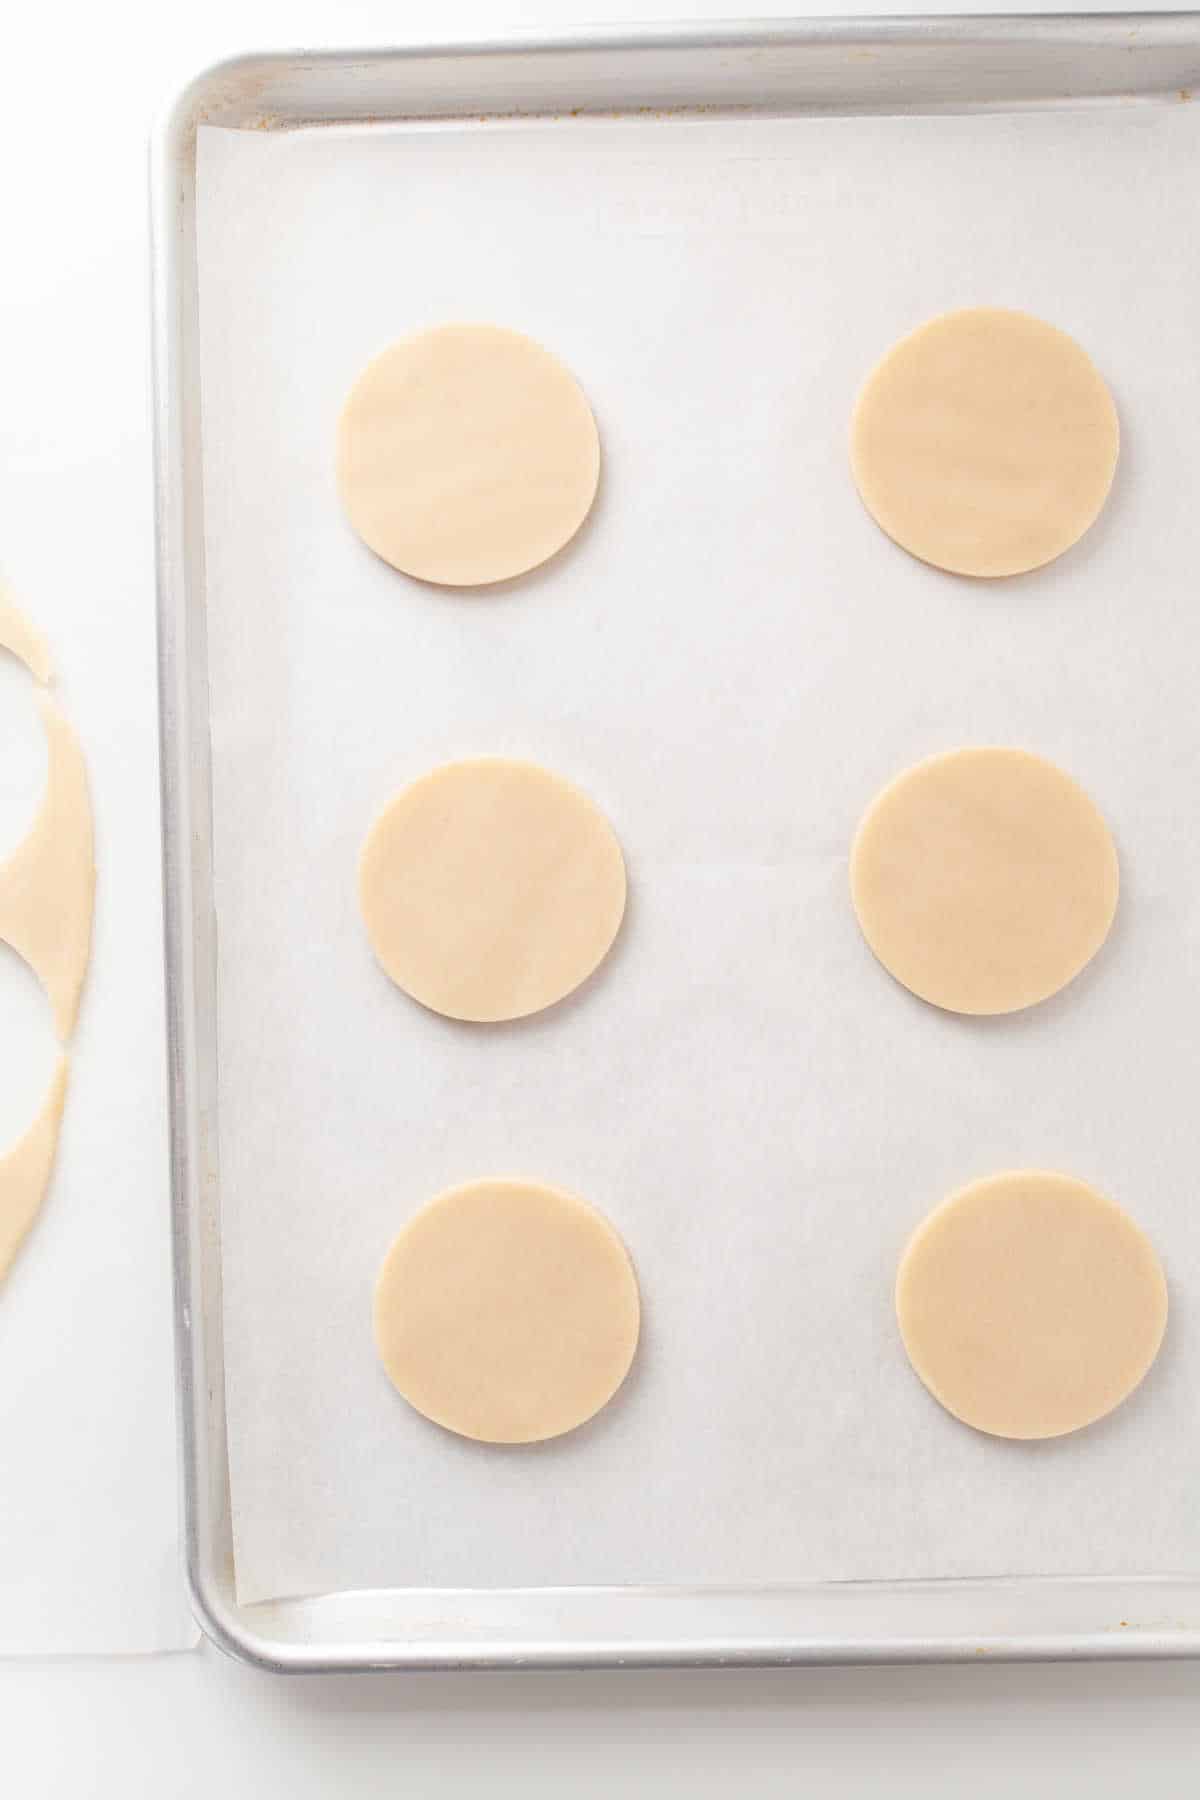 Circles of pie dough on a baking sheet. 